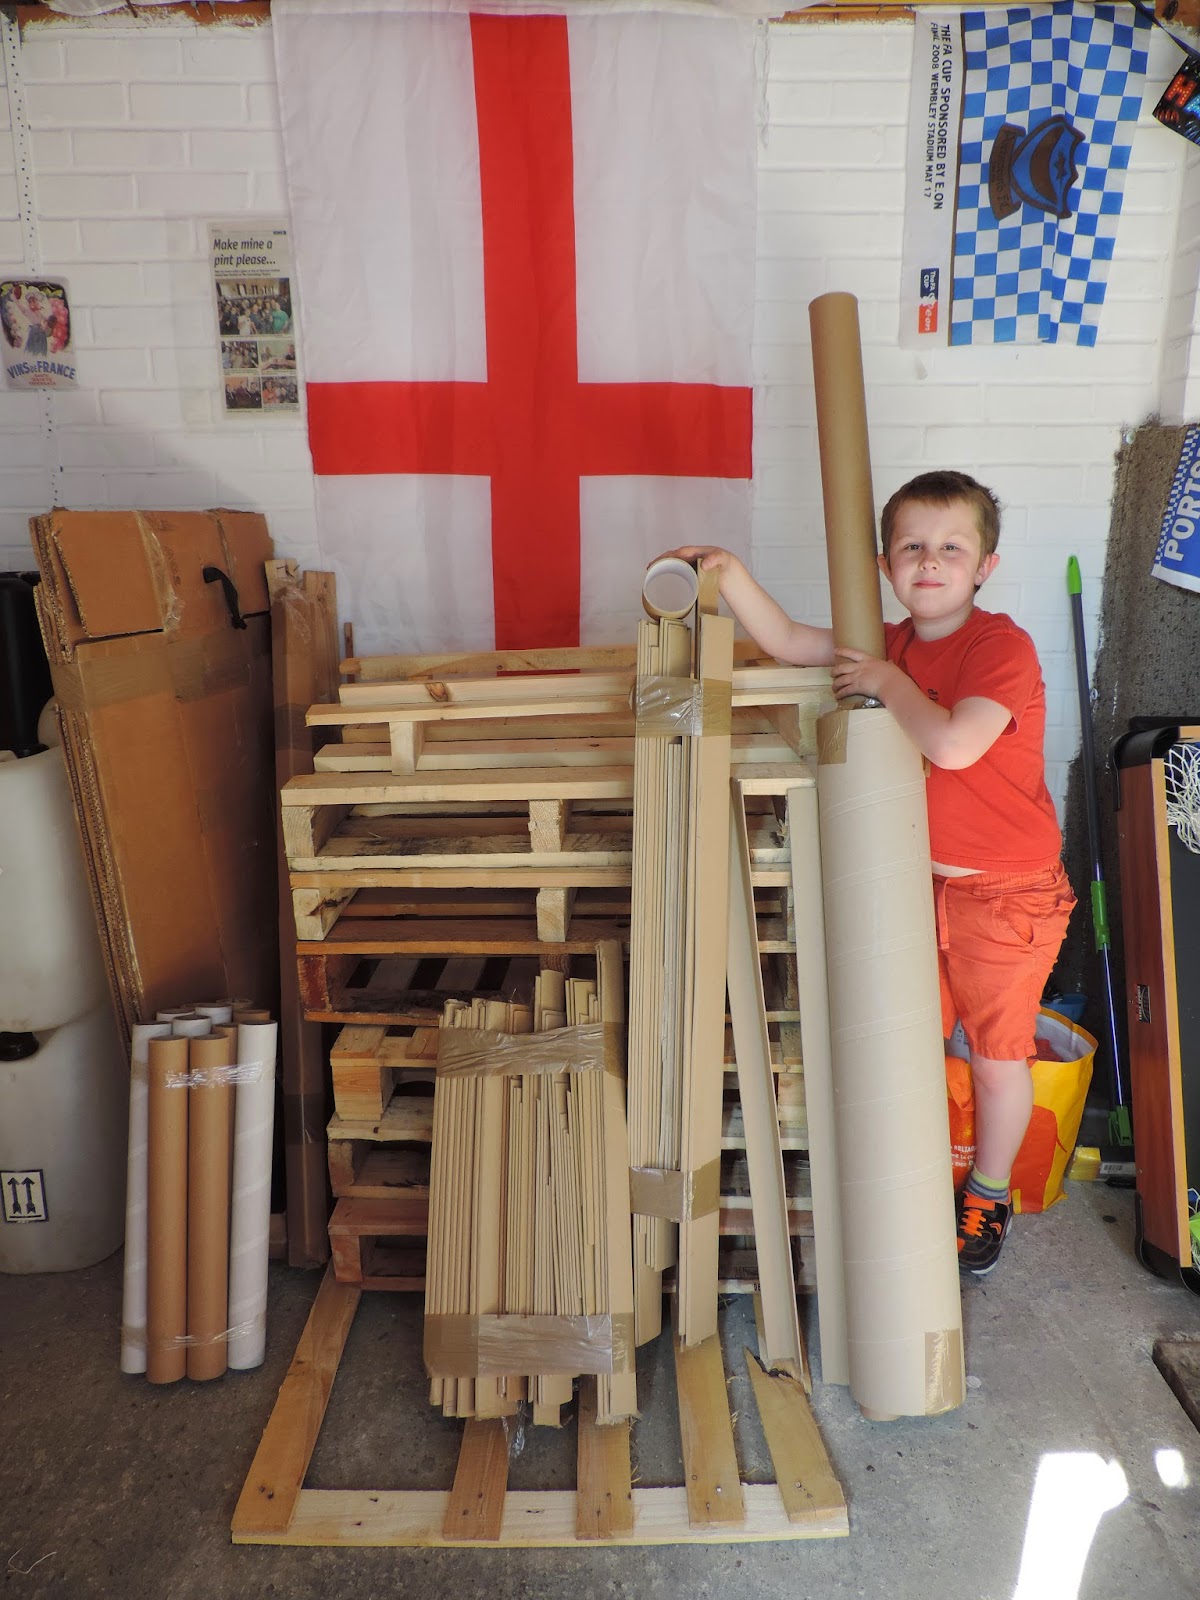 england flag in garage